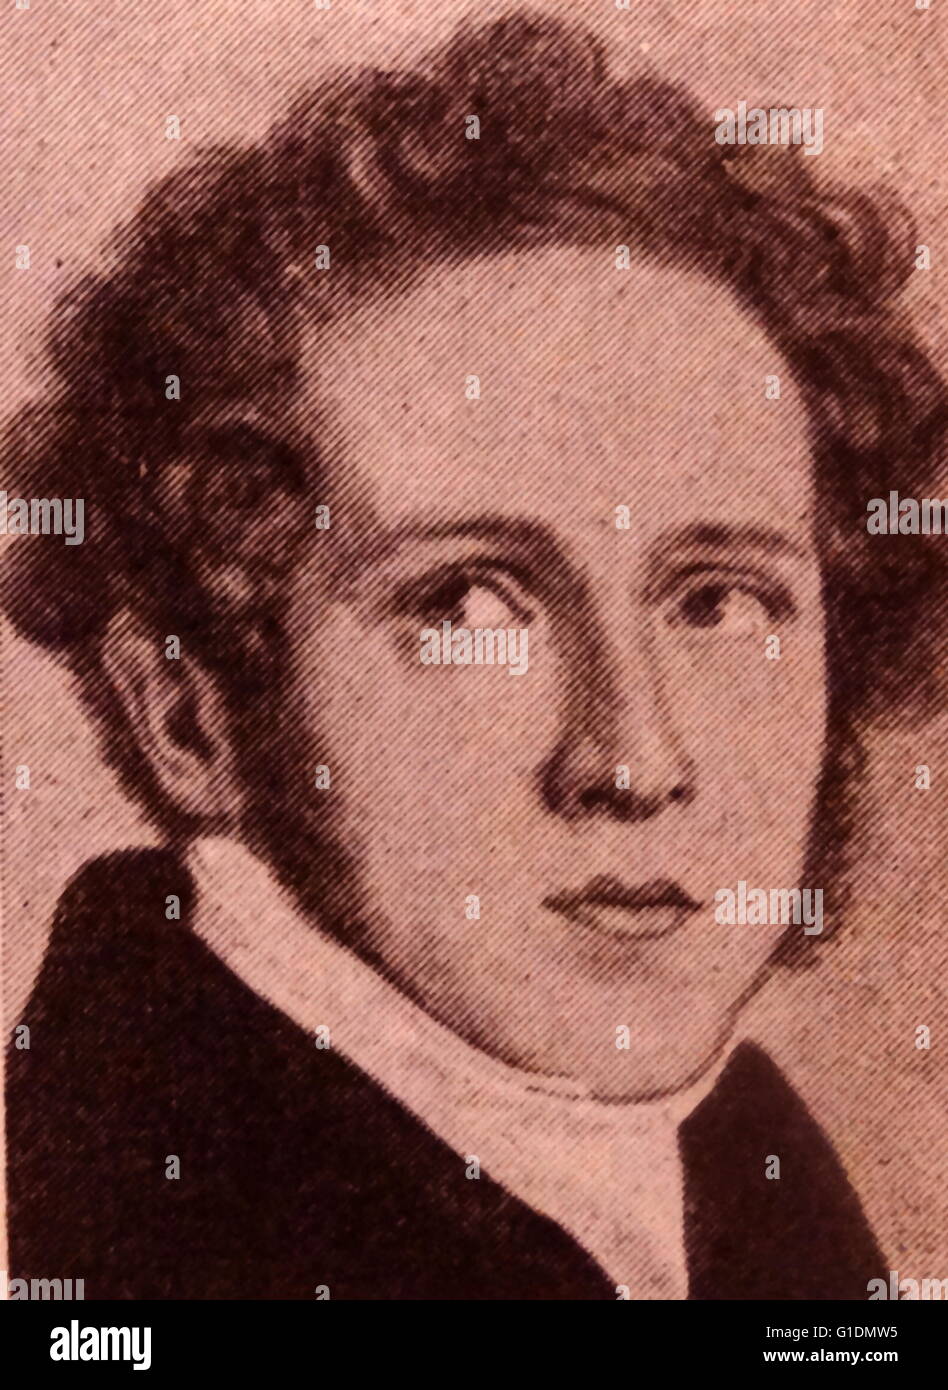 Portrait of Vincenzo Bellini (1801-1835) an Italian opera composer. Dated  19th Century Stock Photo - Alamy